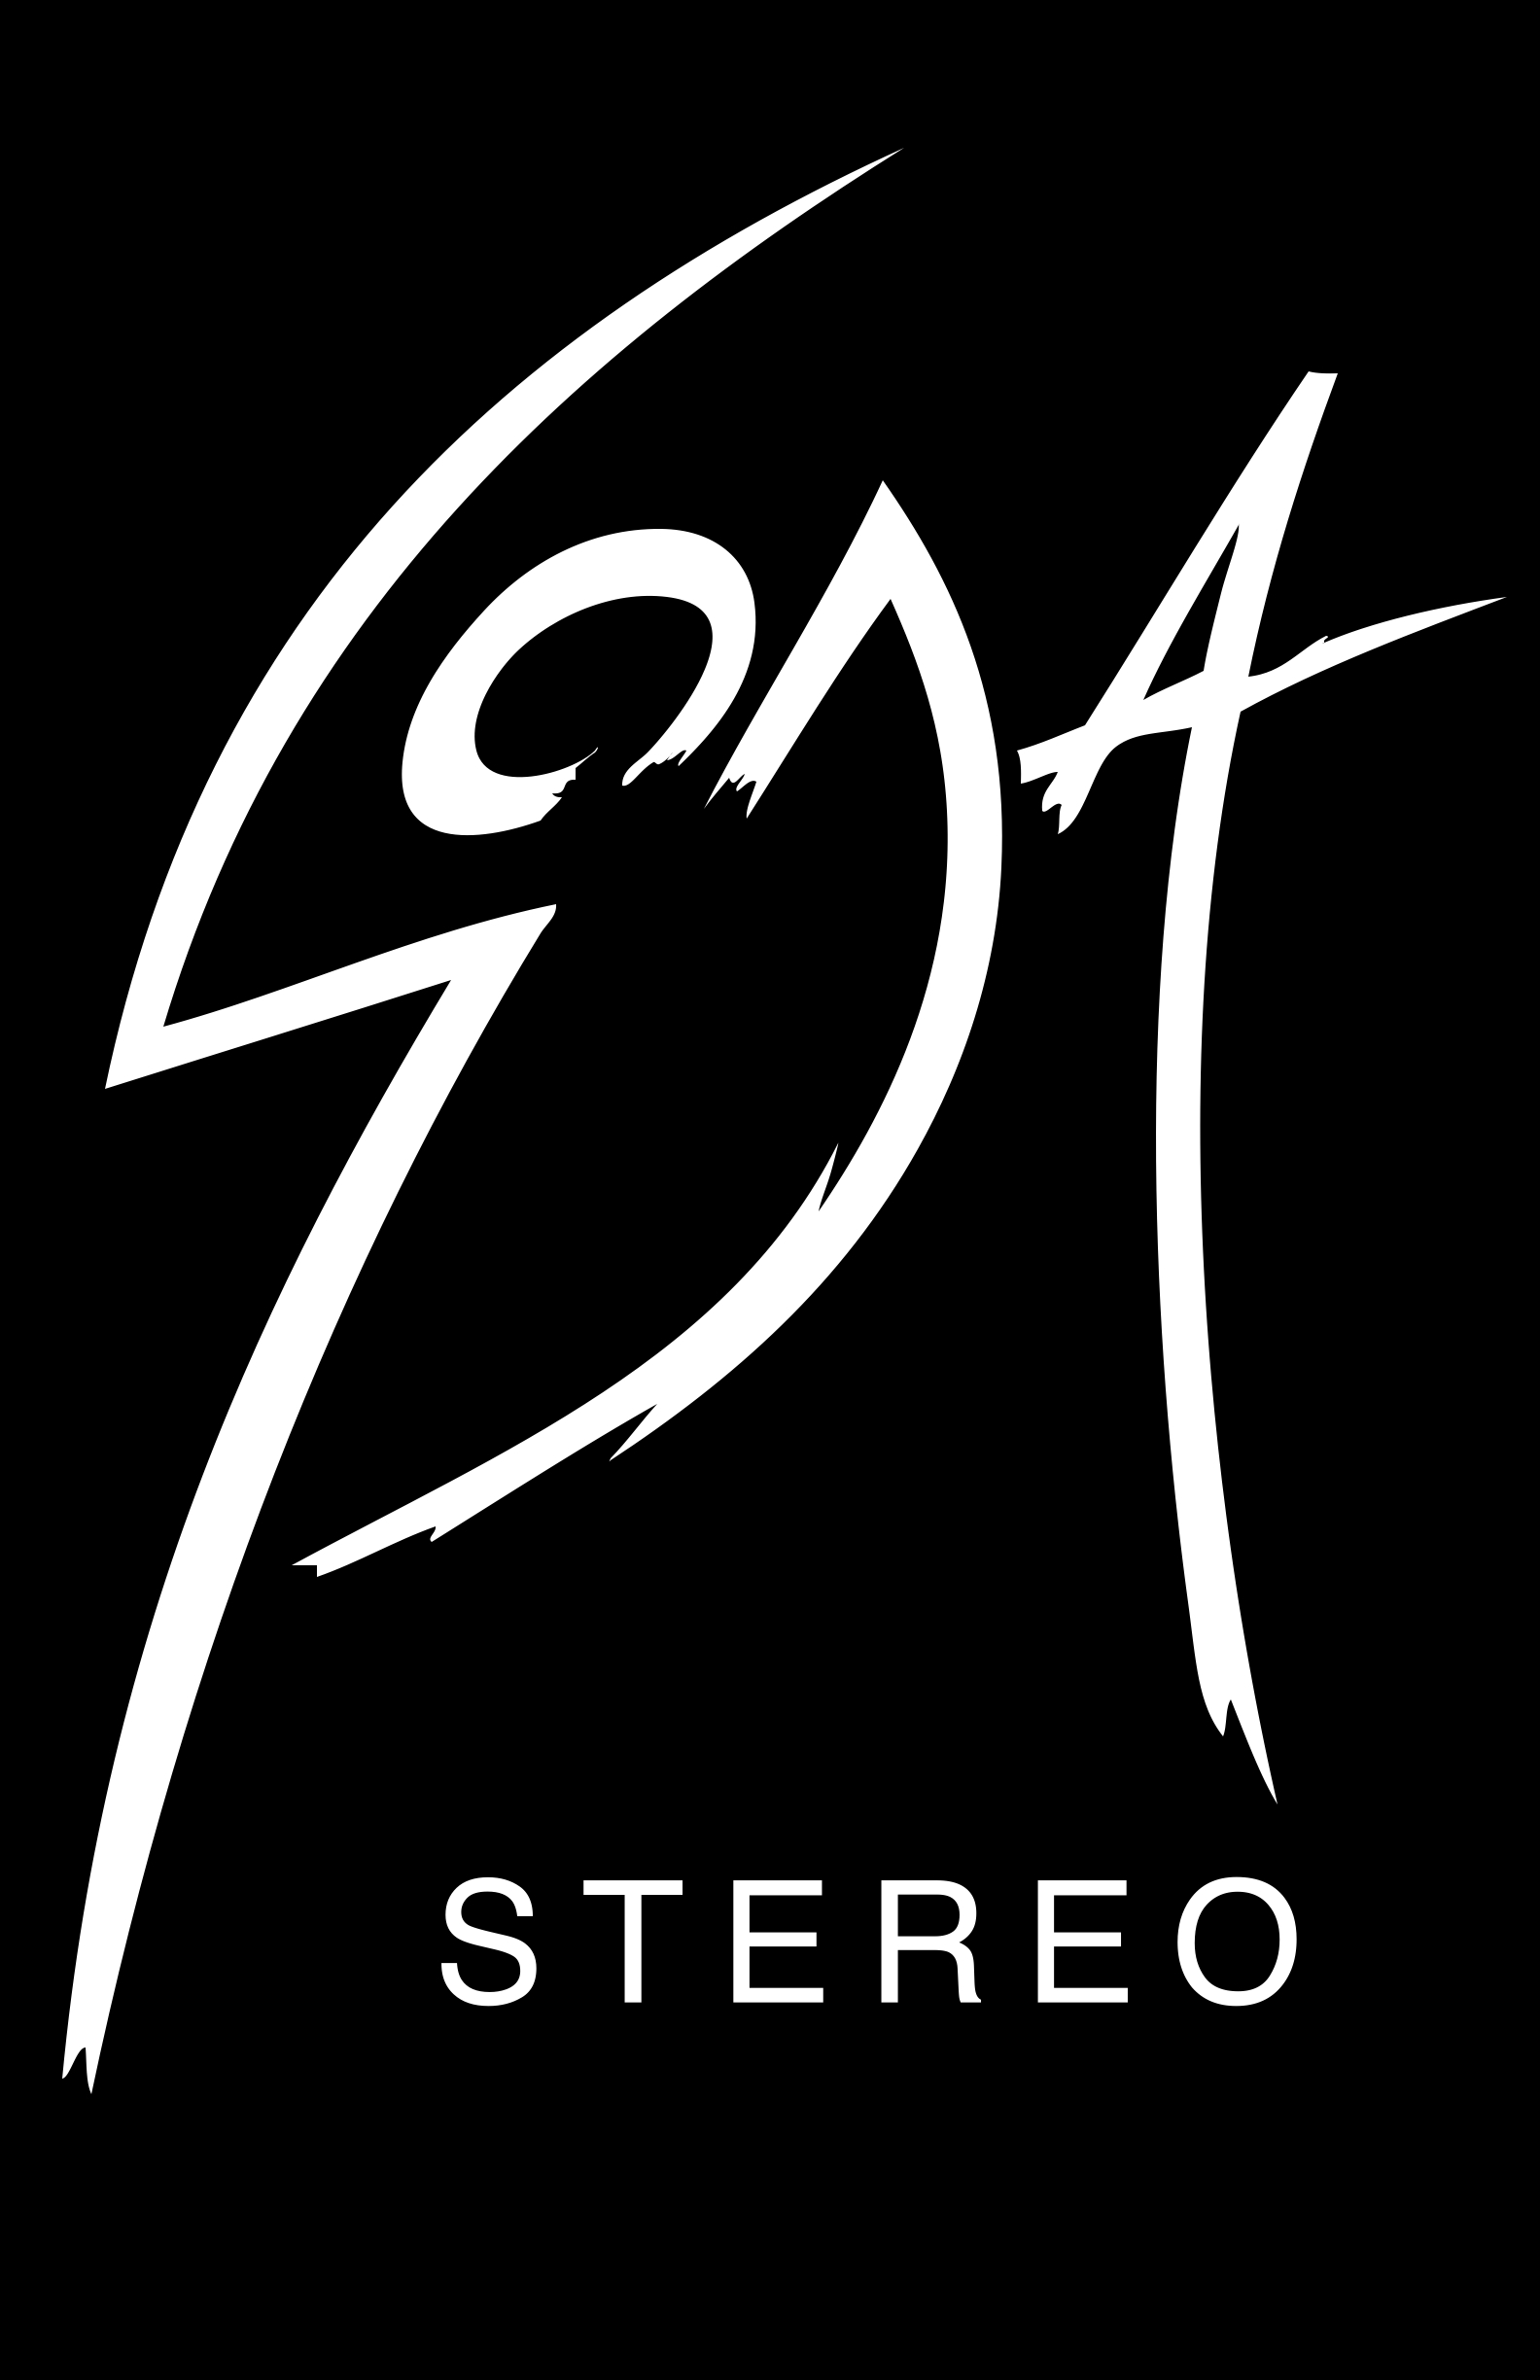 soda stereo logo